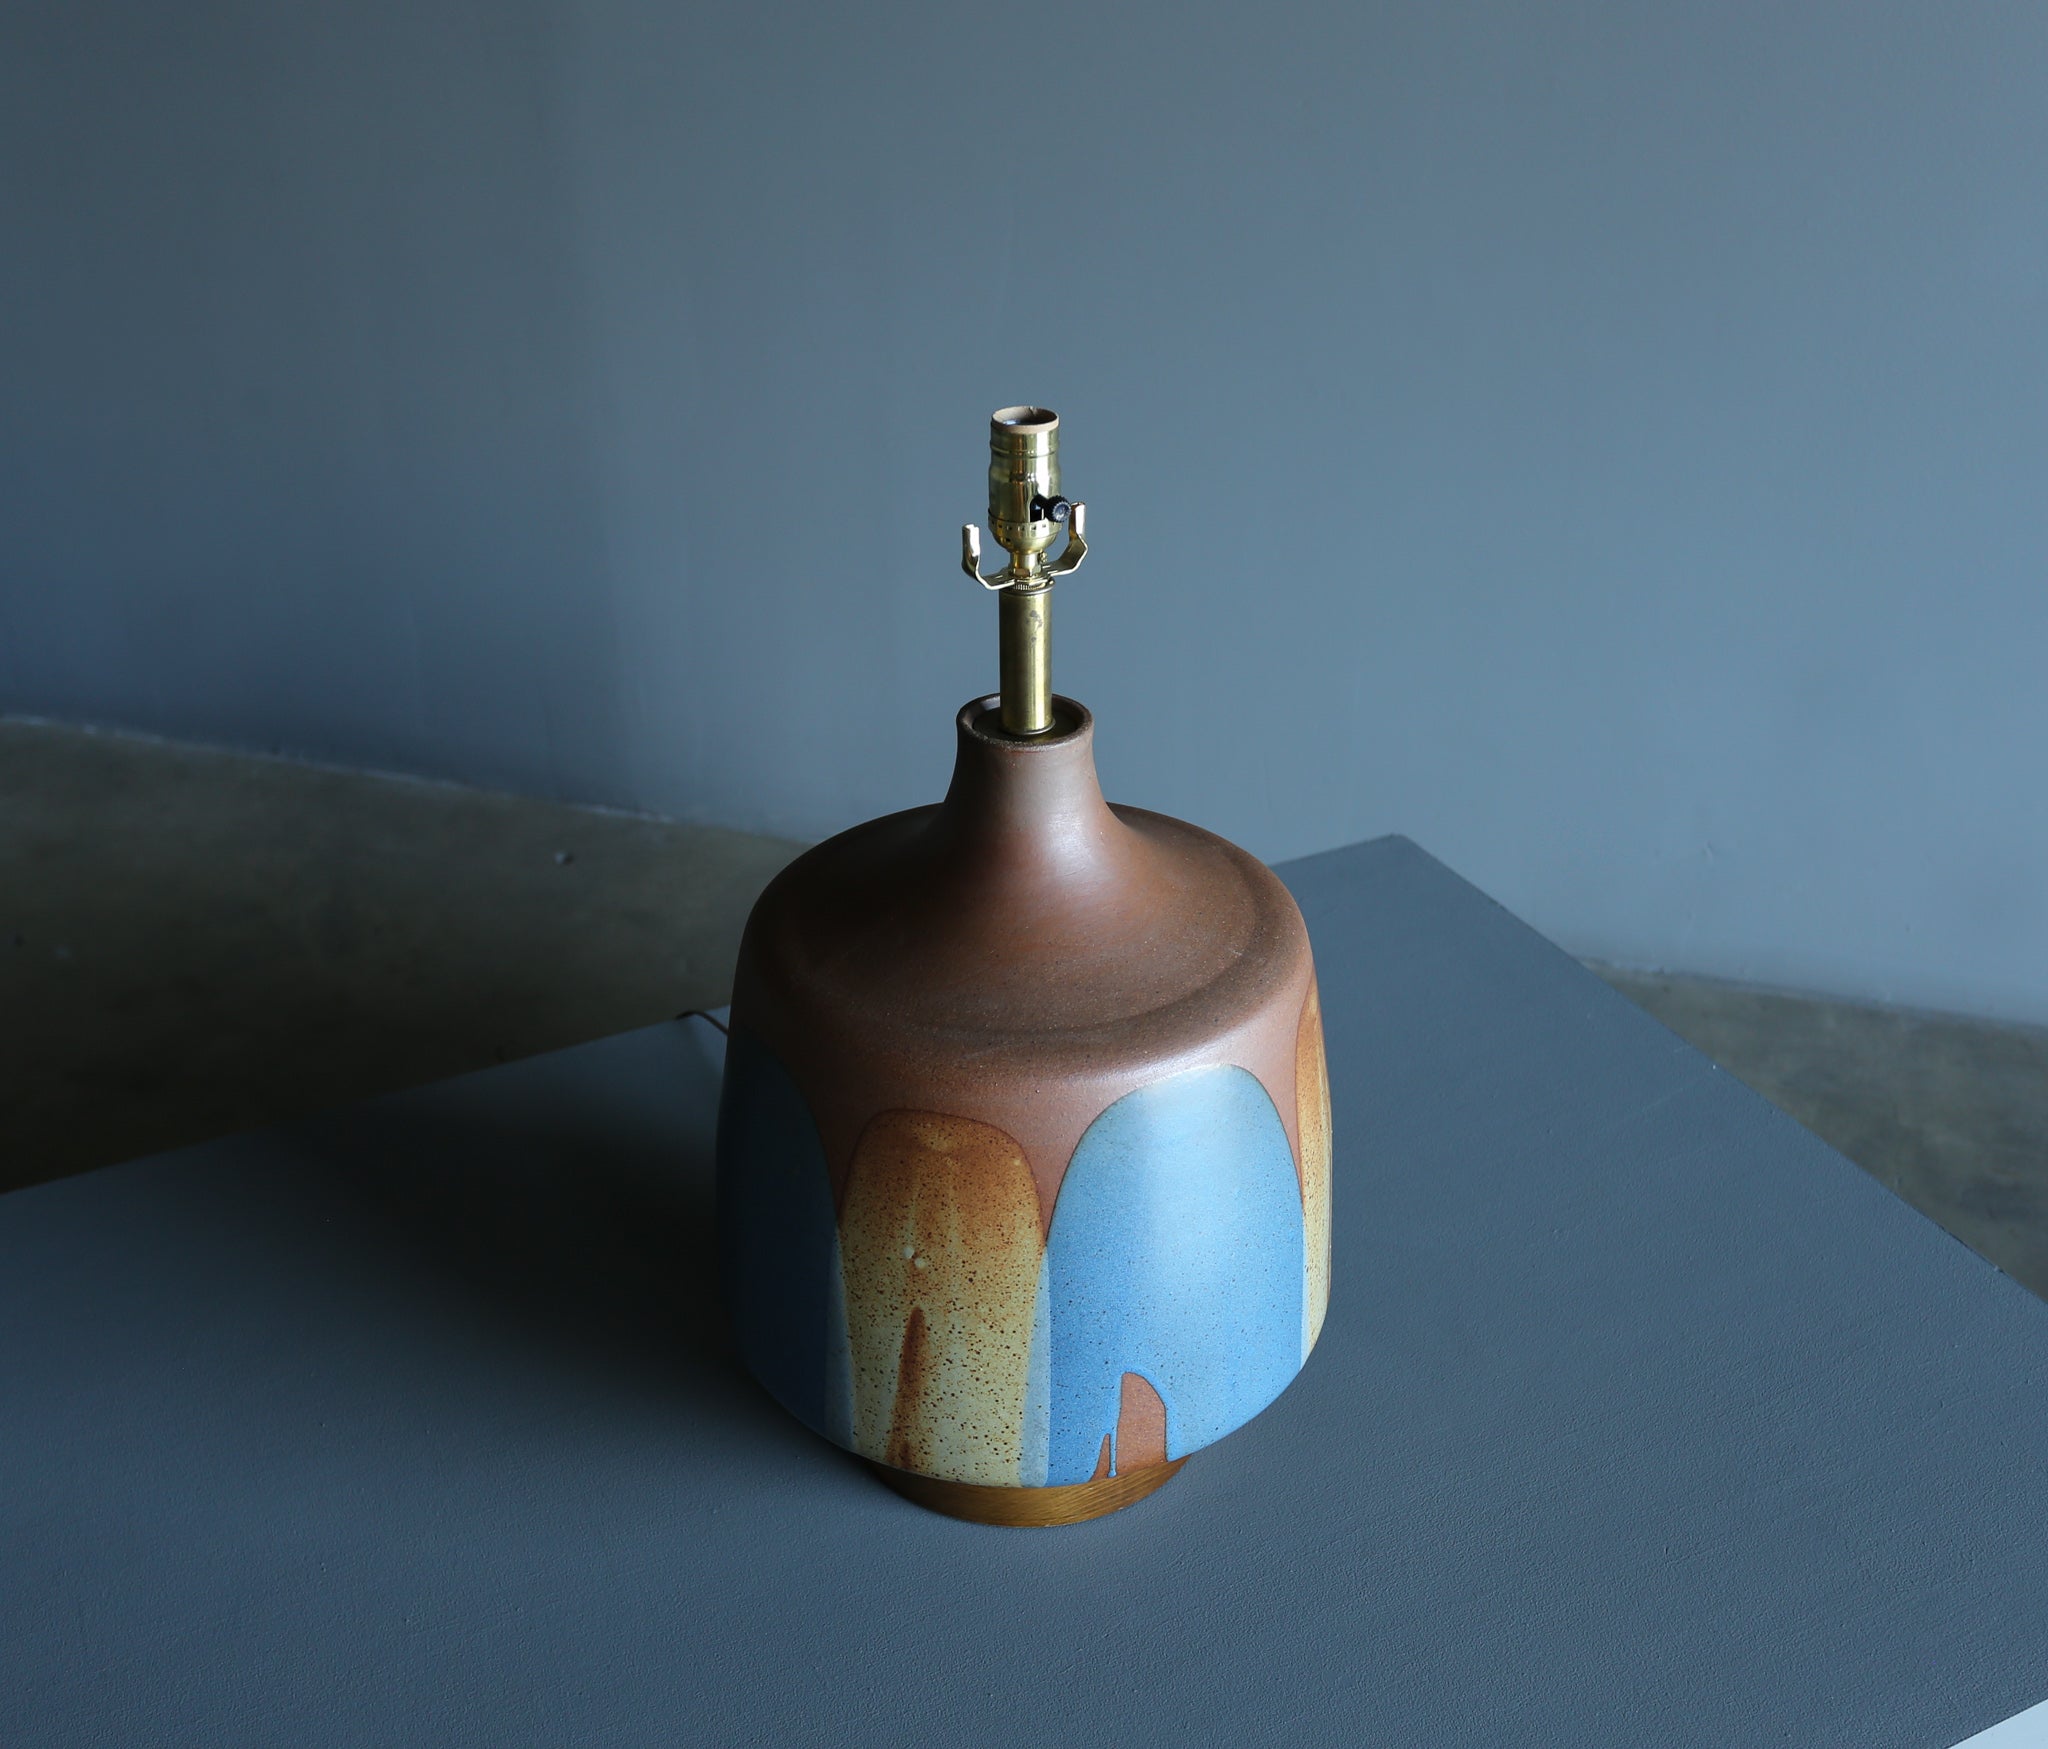 =SOLD= Large Scale David Cressey "Flame Glaze" Ceramic Lamp, circa 1970